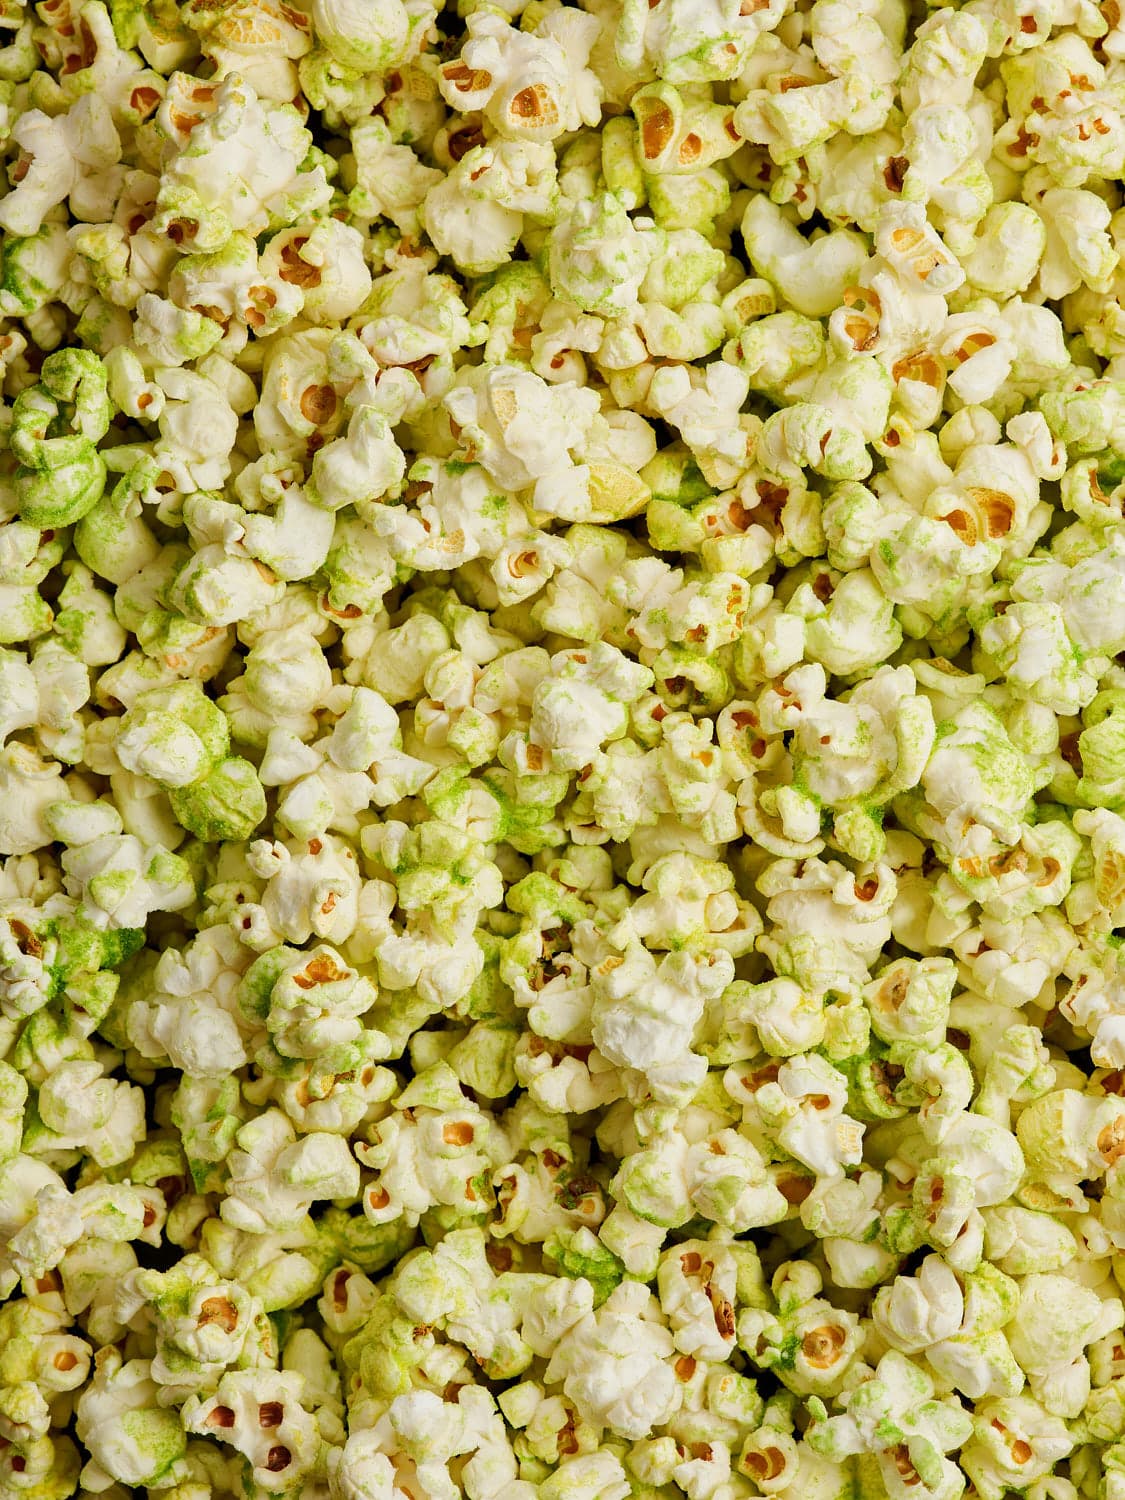 Gourmet Popcorn Packaging and Closeups